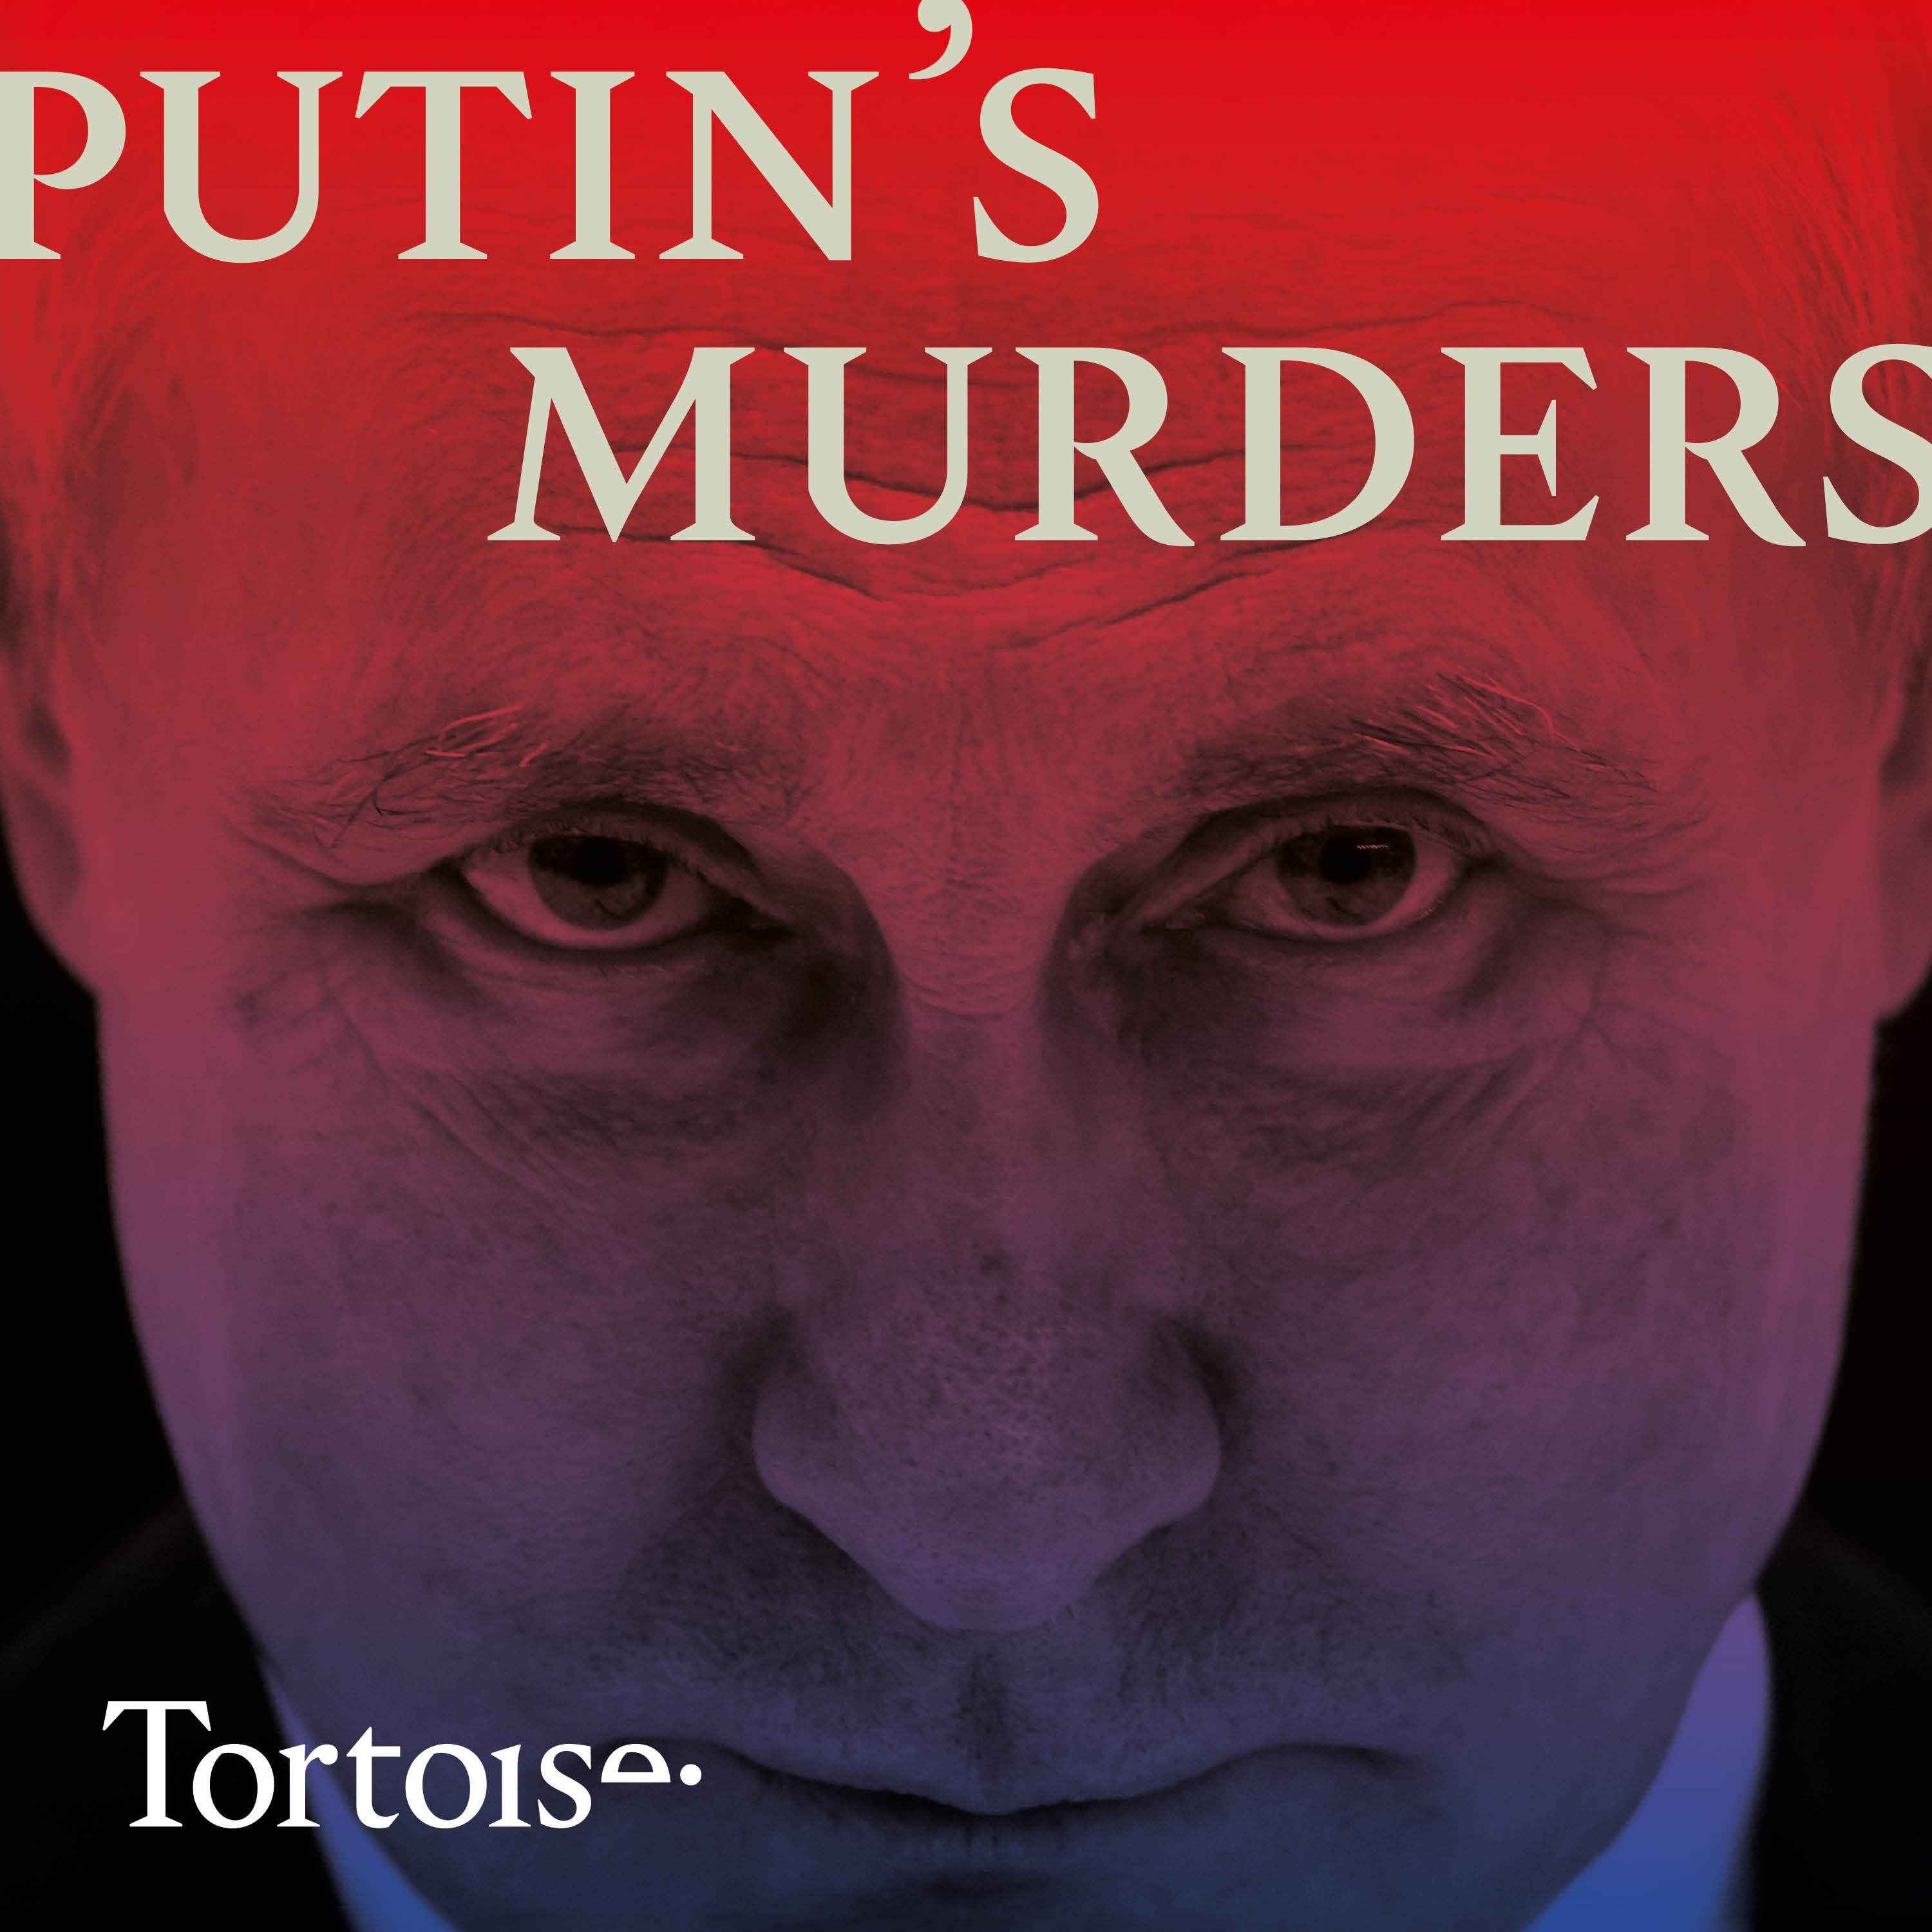 Putin’s murders: The full Stalin - episode 3